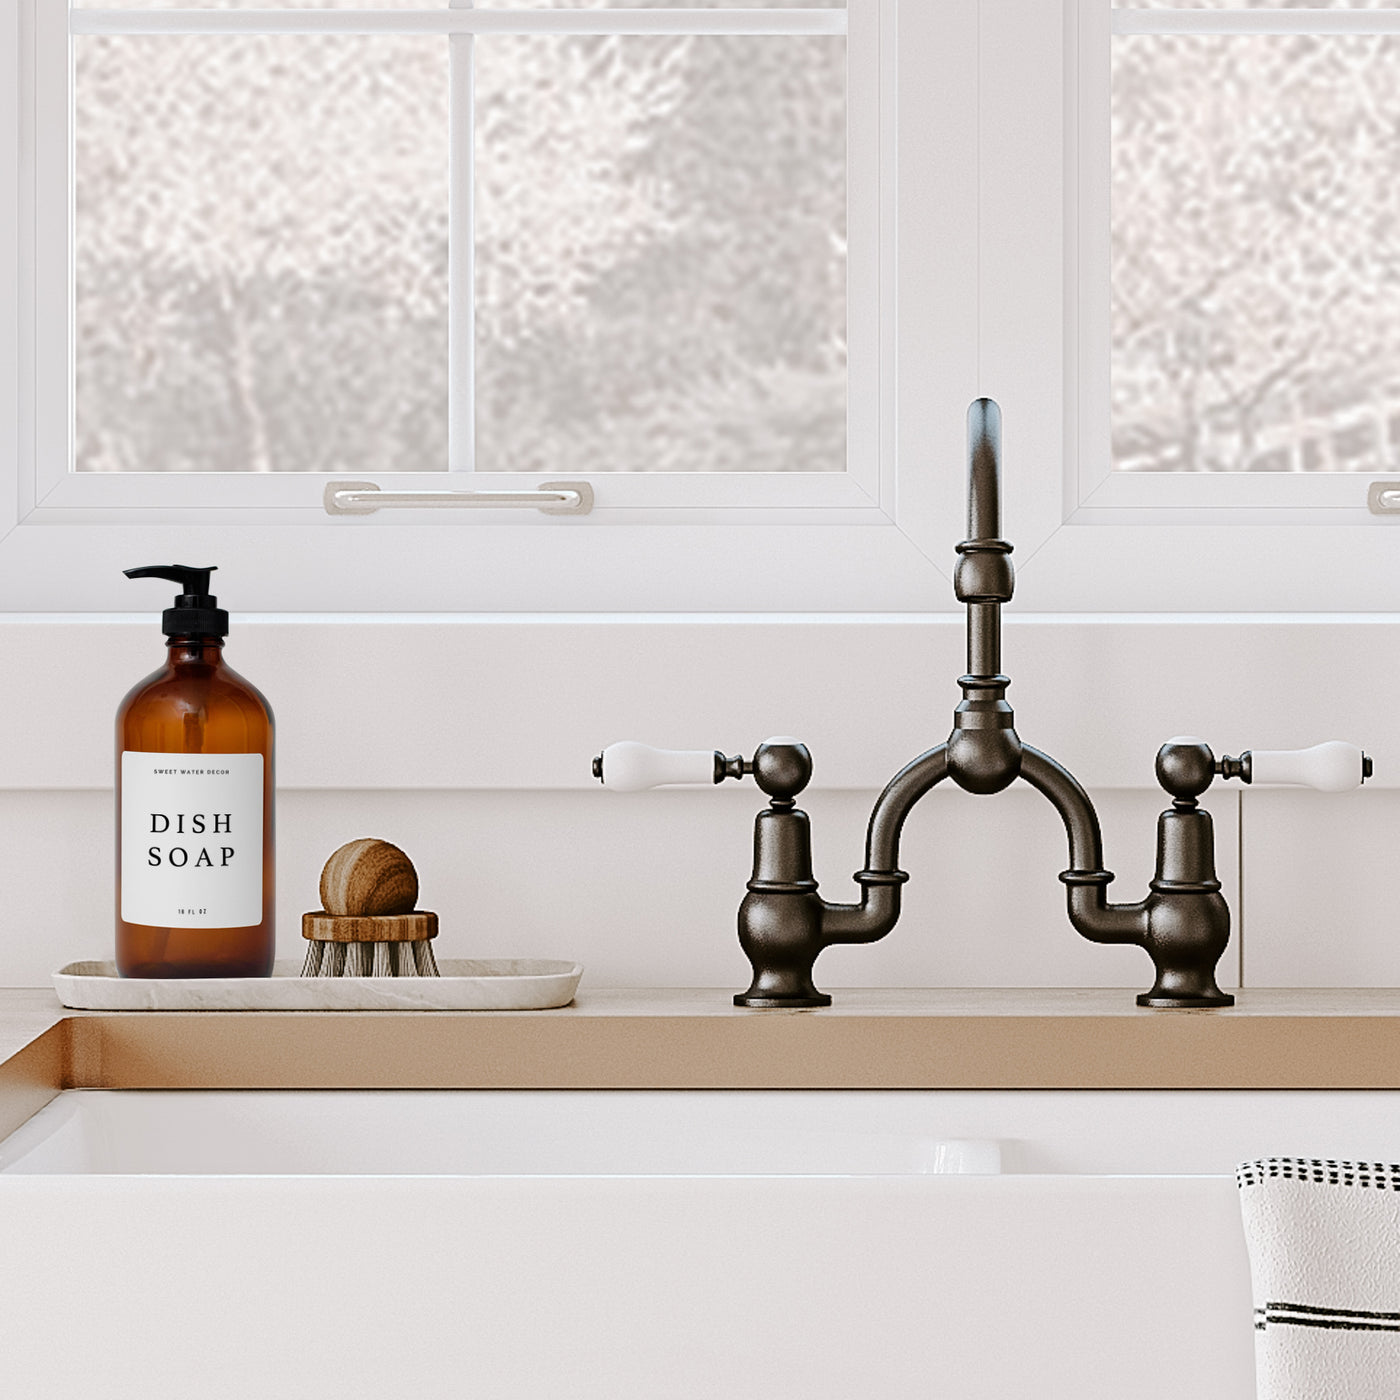 16oz Amber Glass Dish Soap Dispenser - White Text Label - Sweet Water Decor - Dispensers